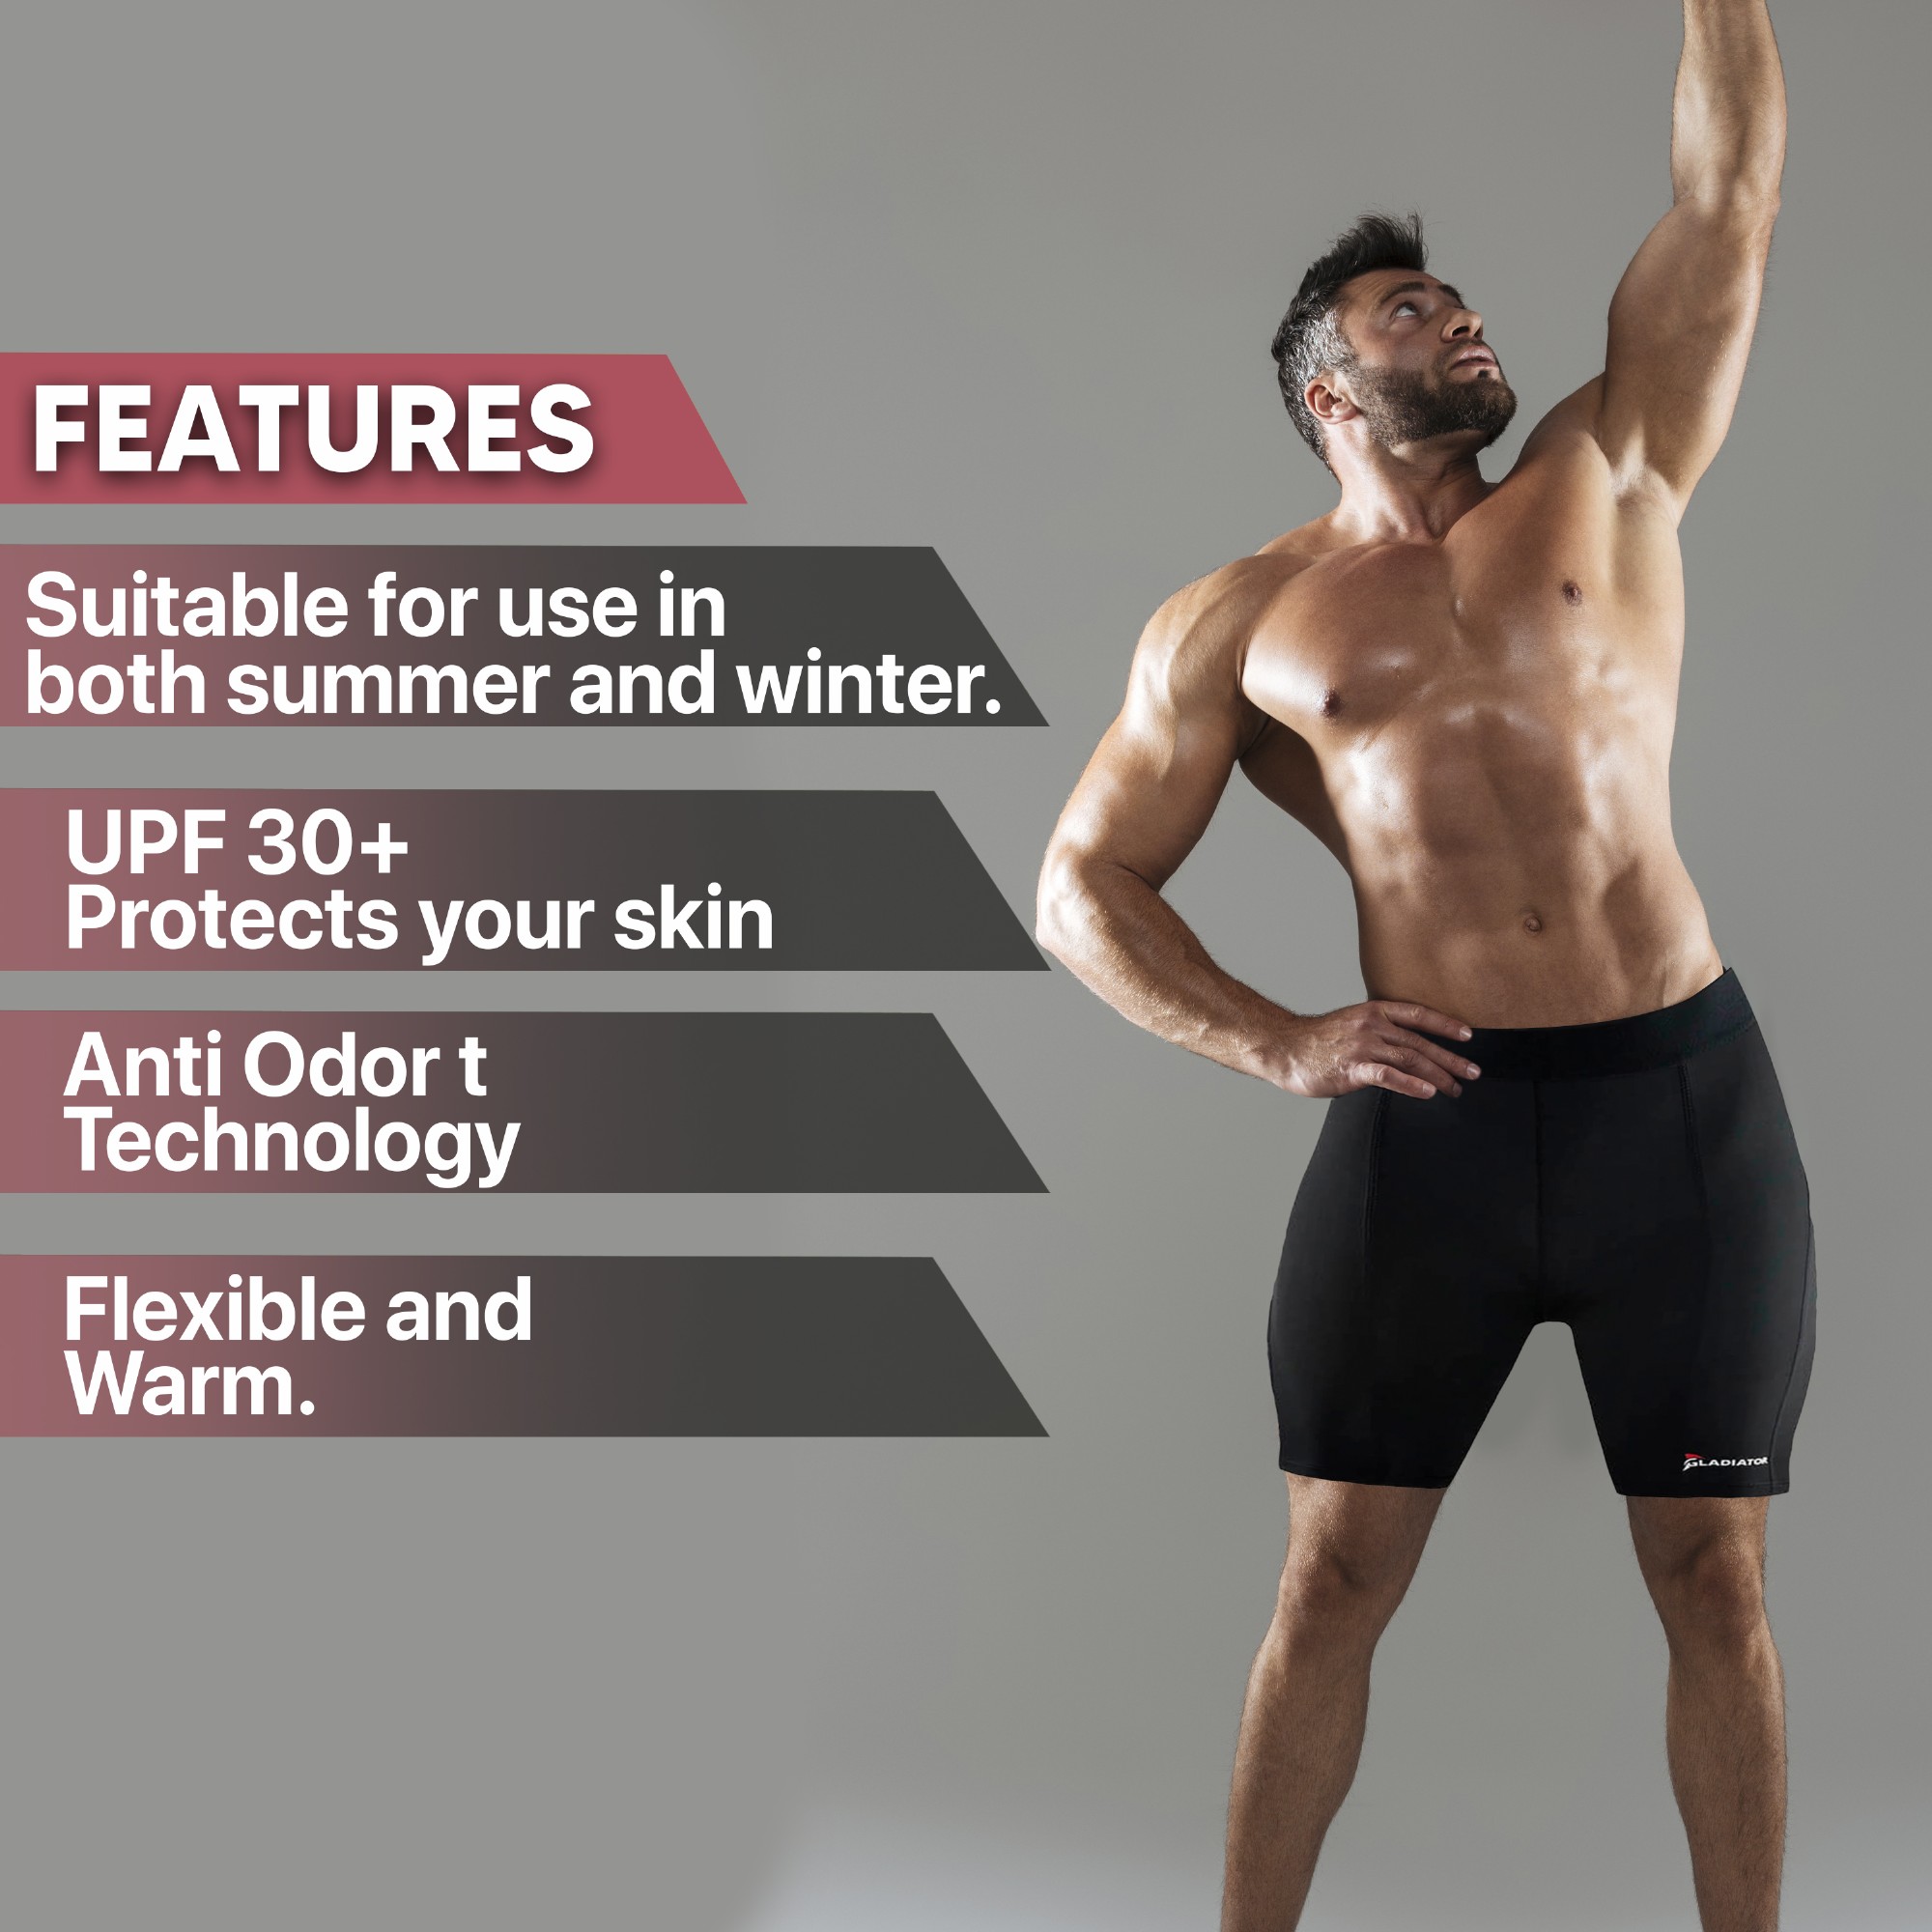 Gladiator Sports Compression Shorts - Men